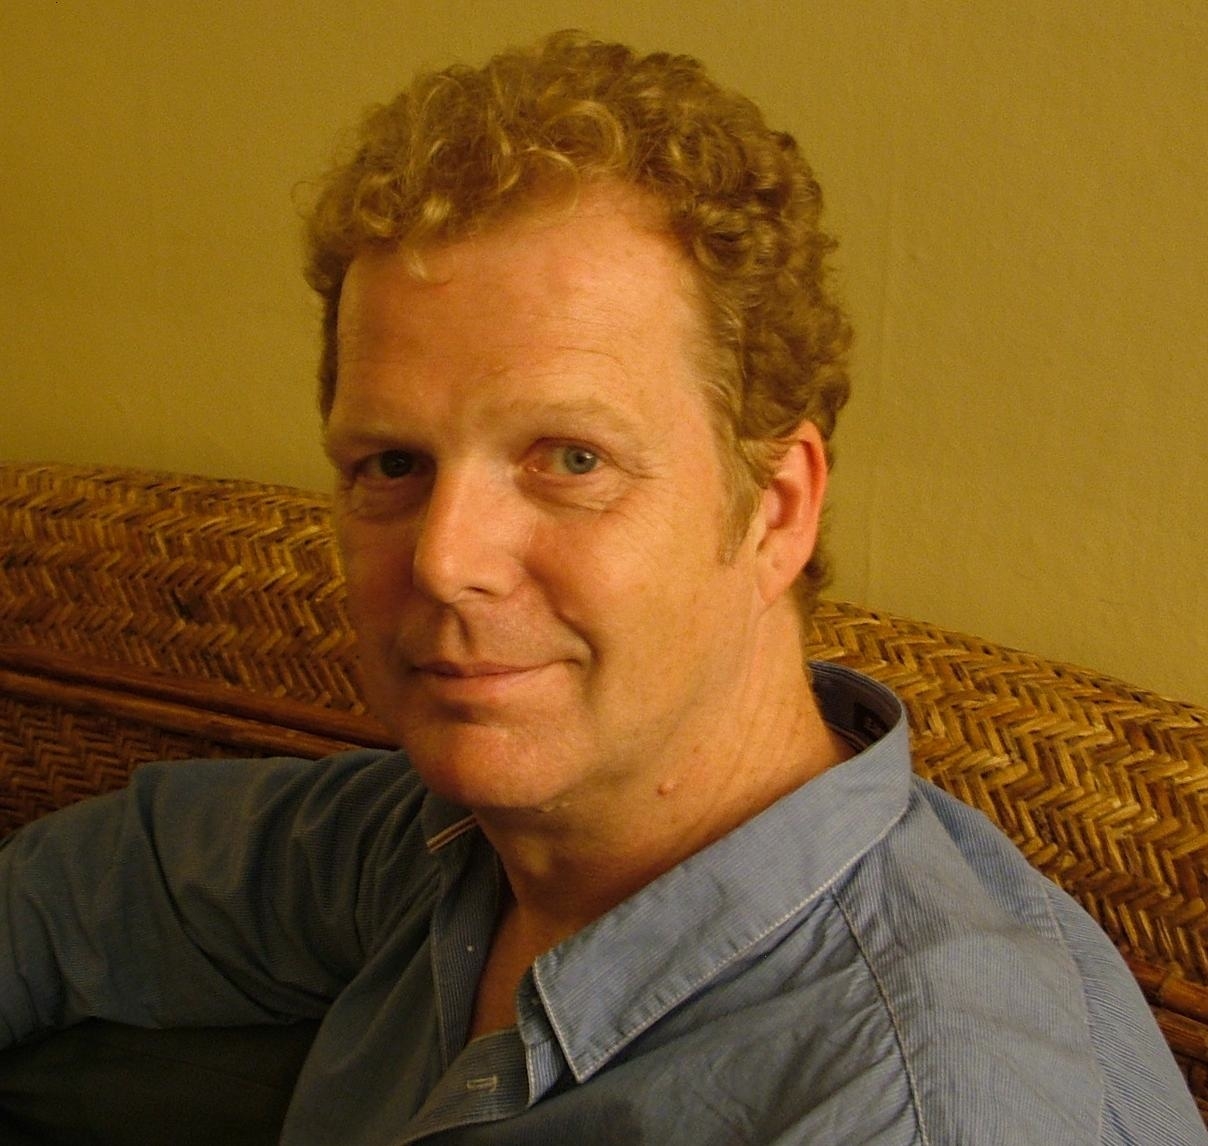 Author John Powell